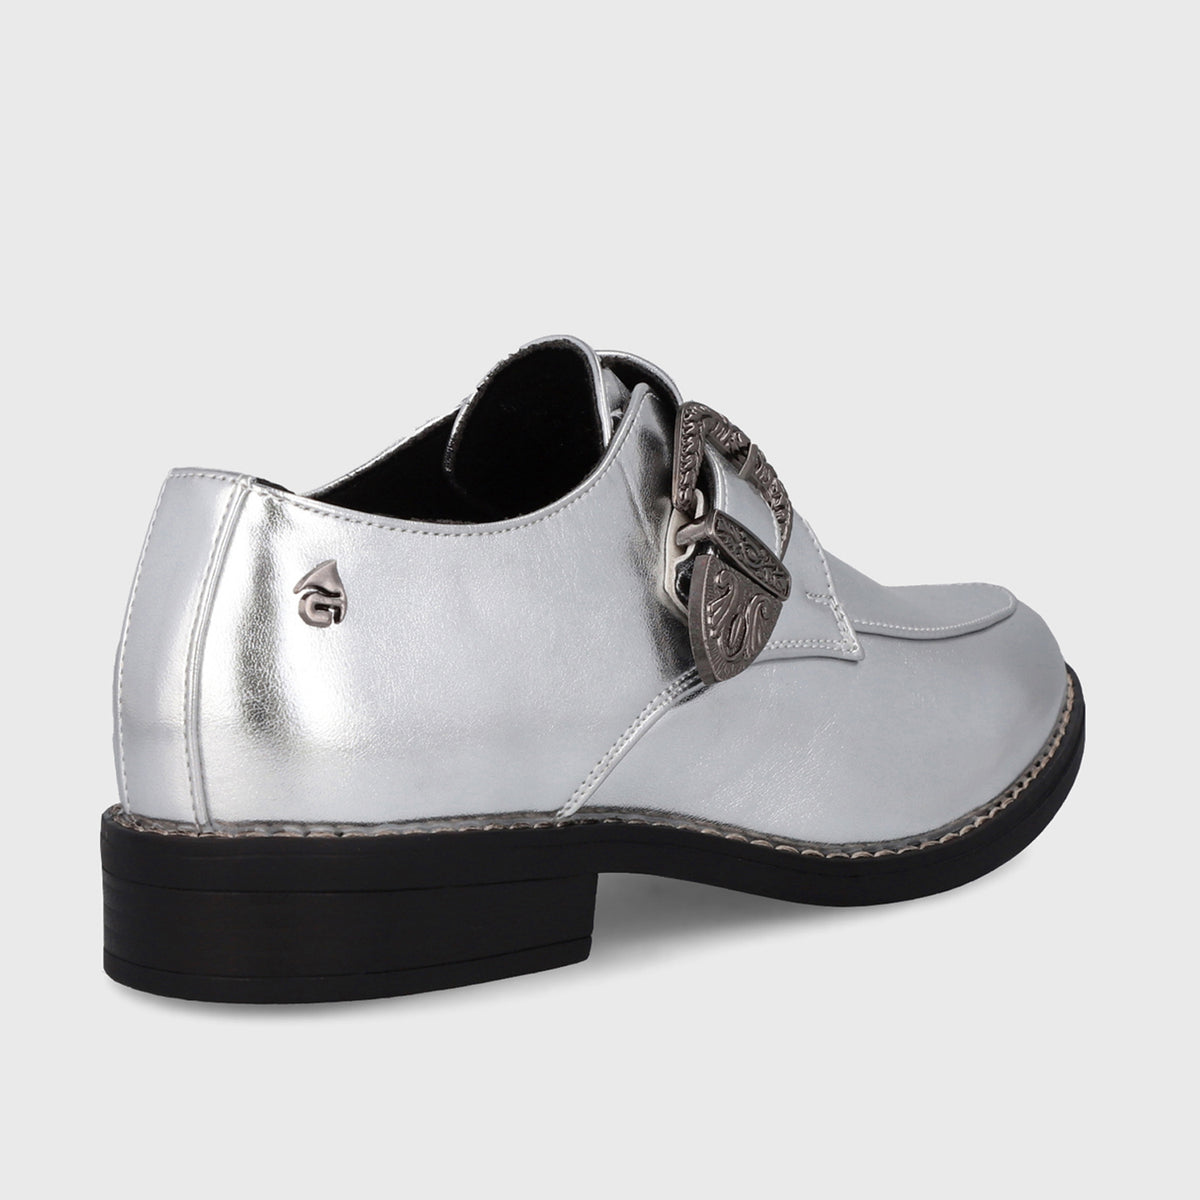 Zapato Plateado Charol Mujer 17565